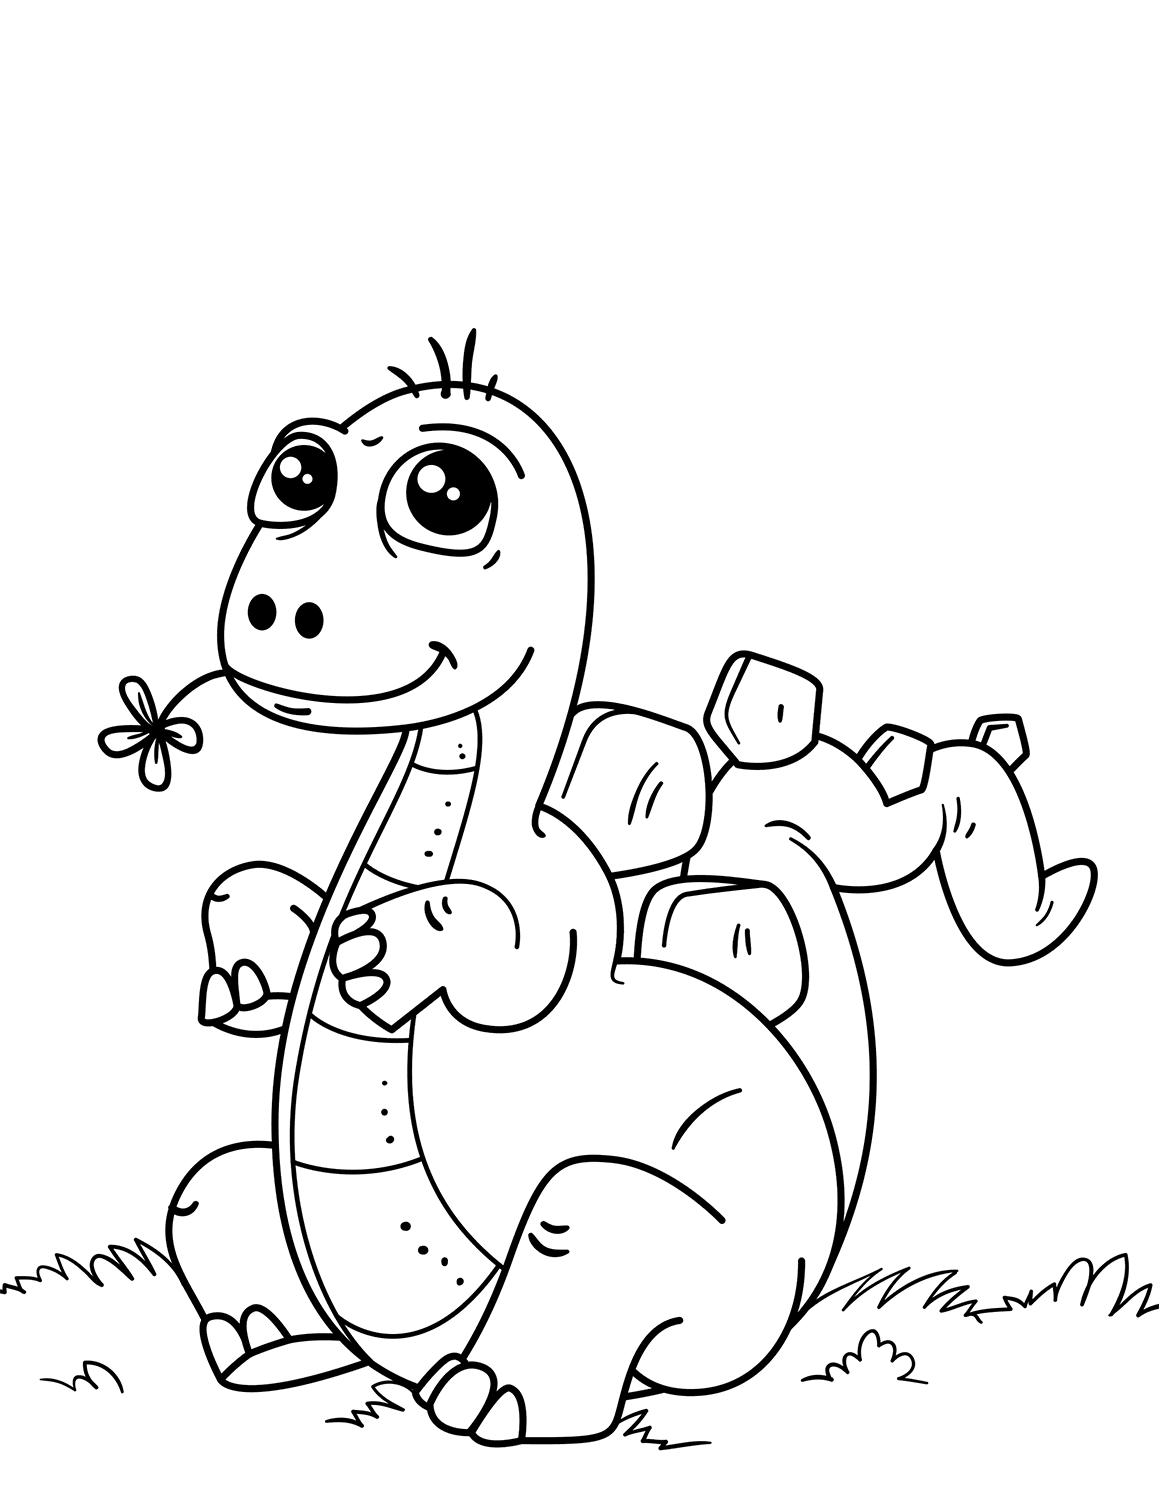 Download Cute Dinosaur Coloring Page - Free Printable Coloring ...